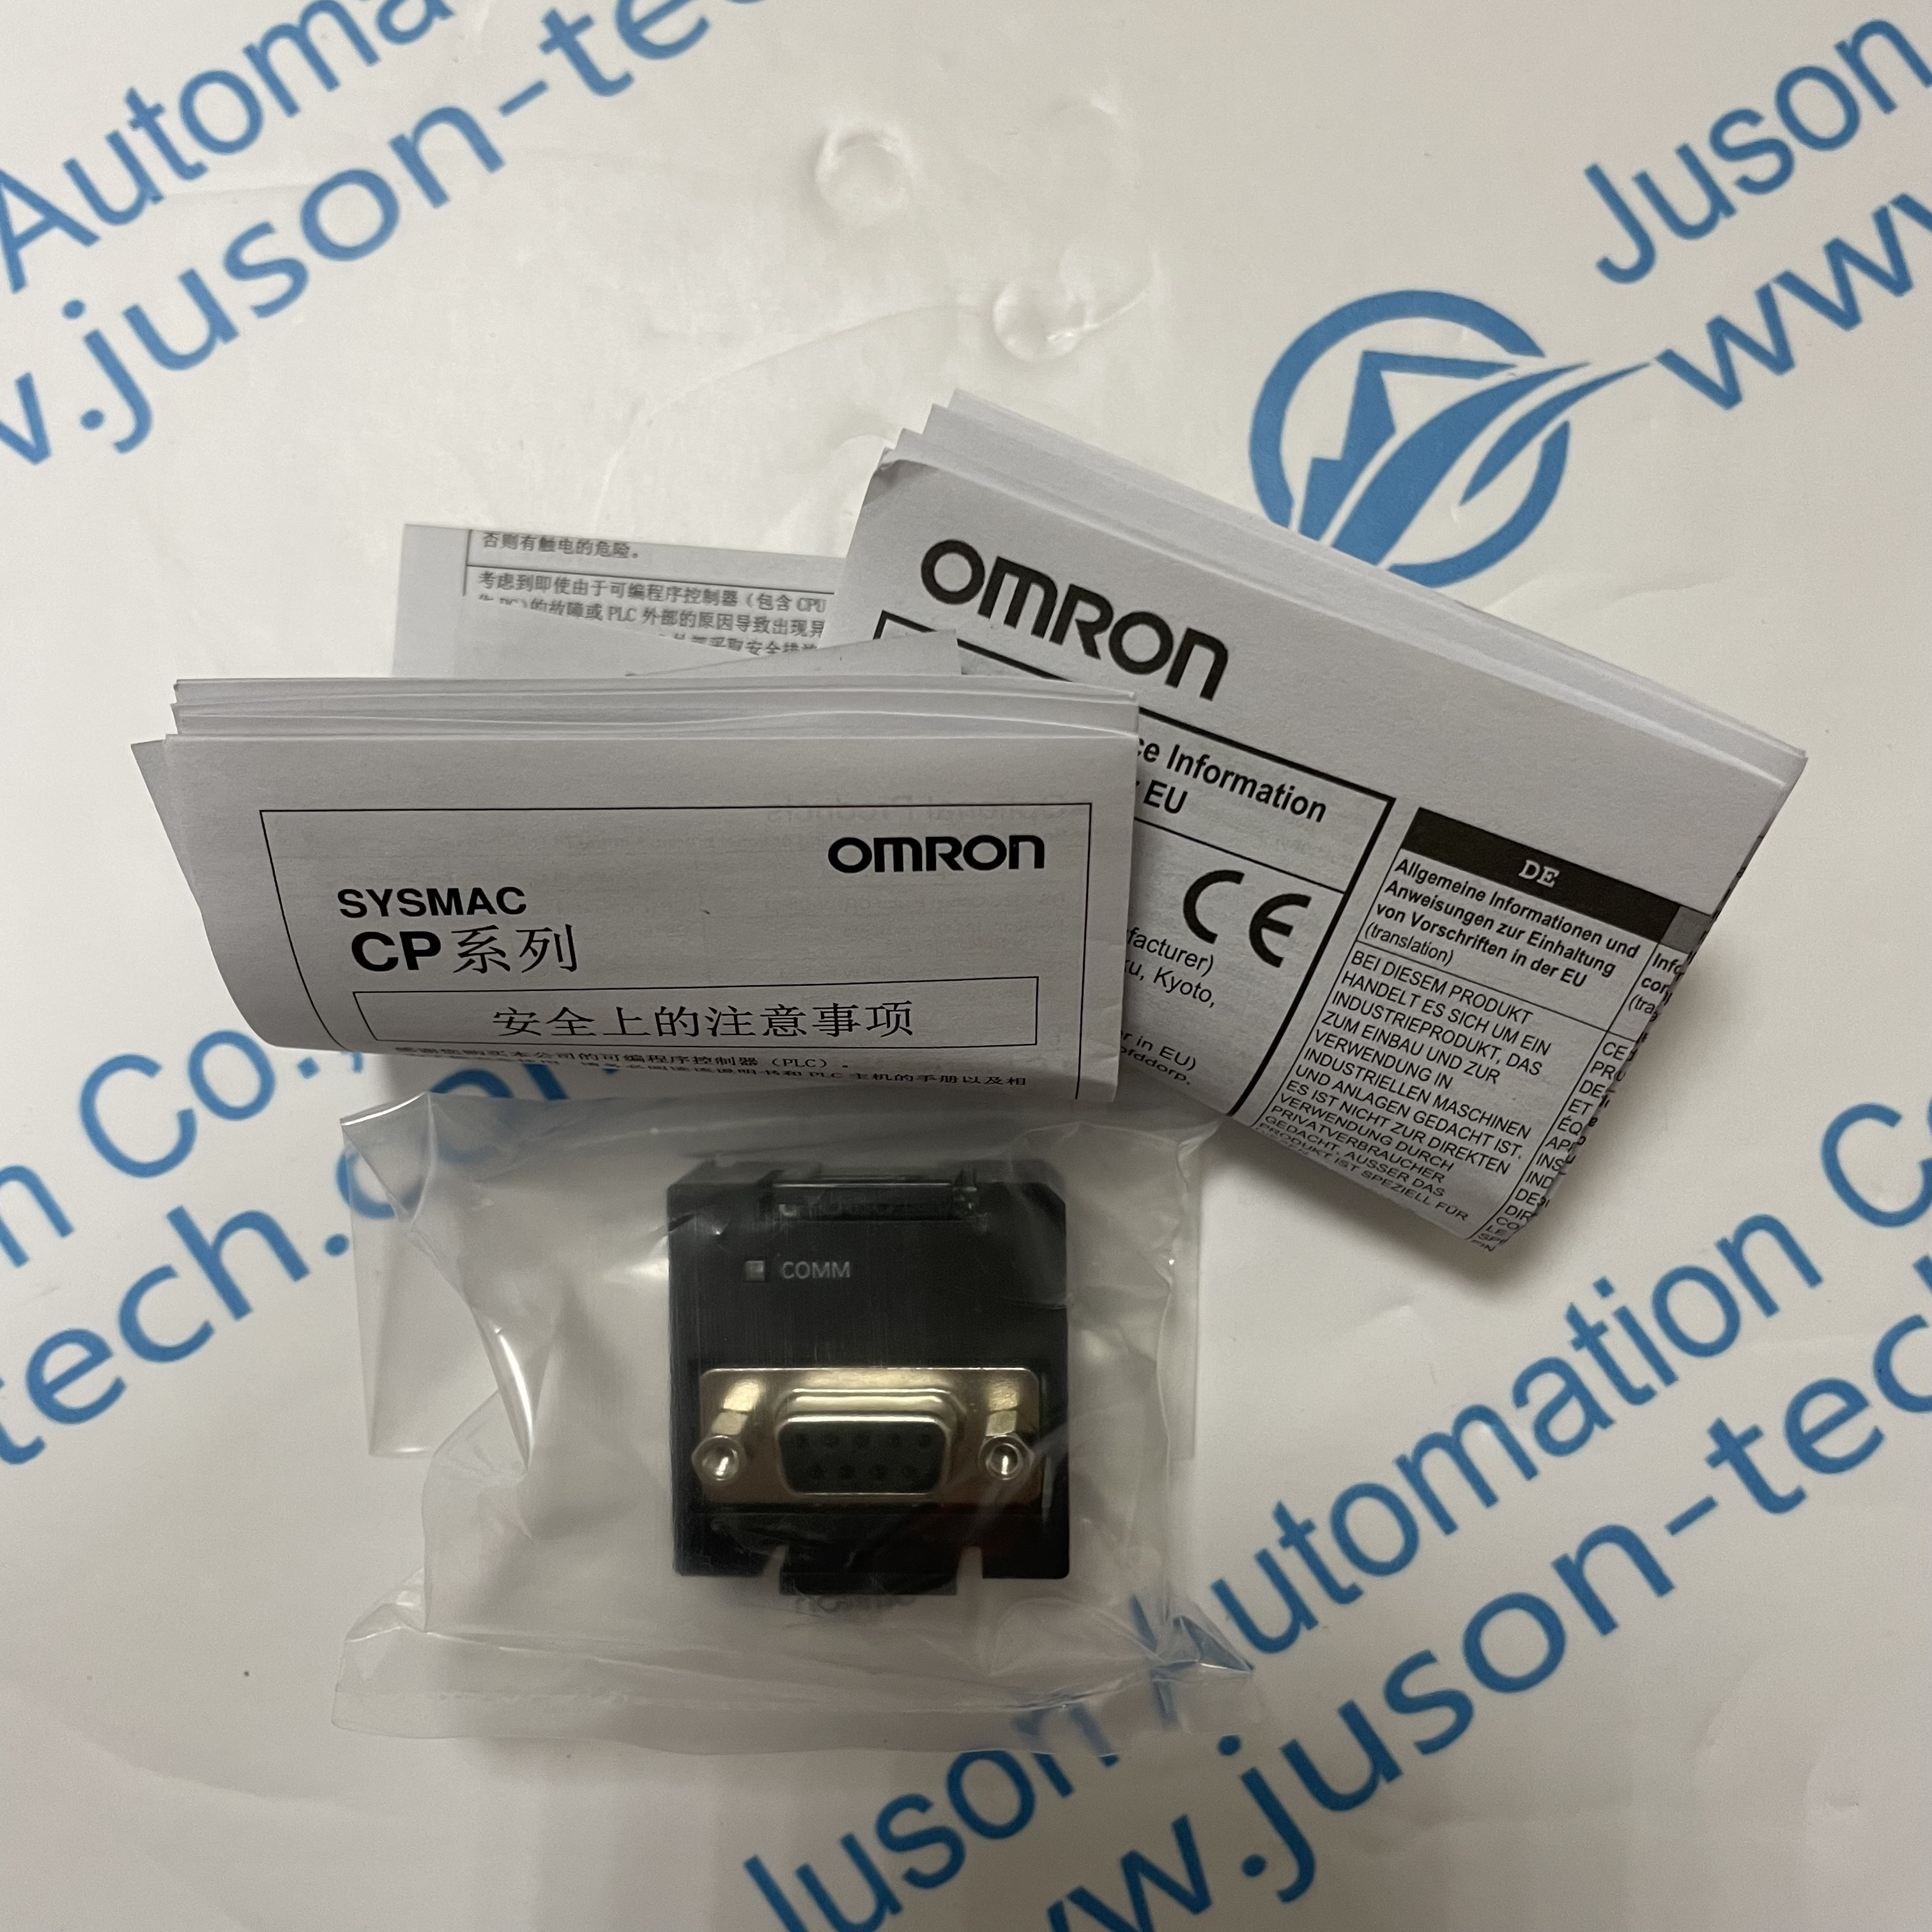 OMRON PLC Programmable Controller CP1W-CIF01